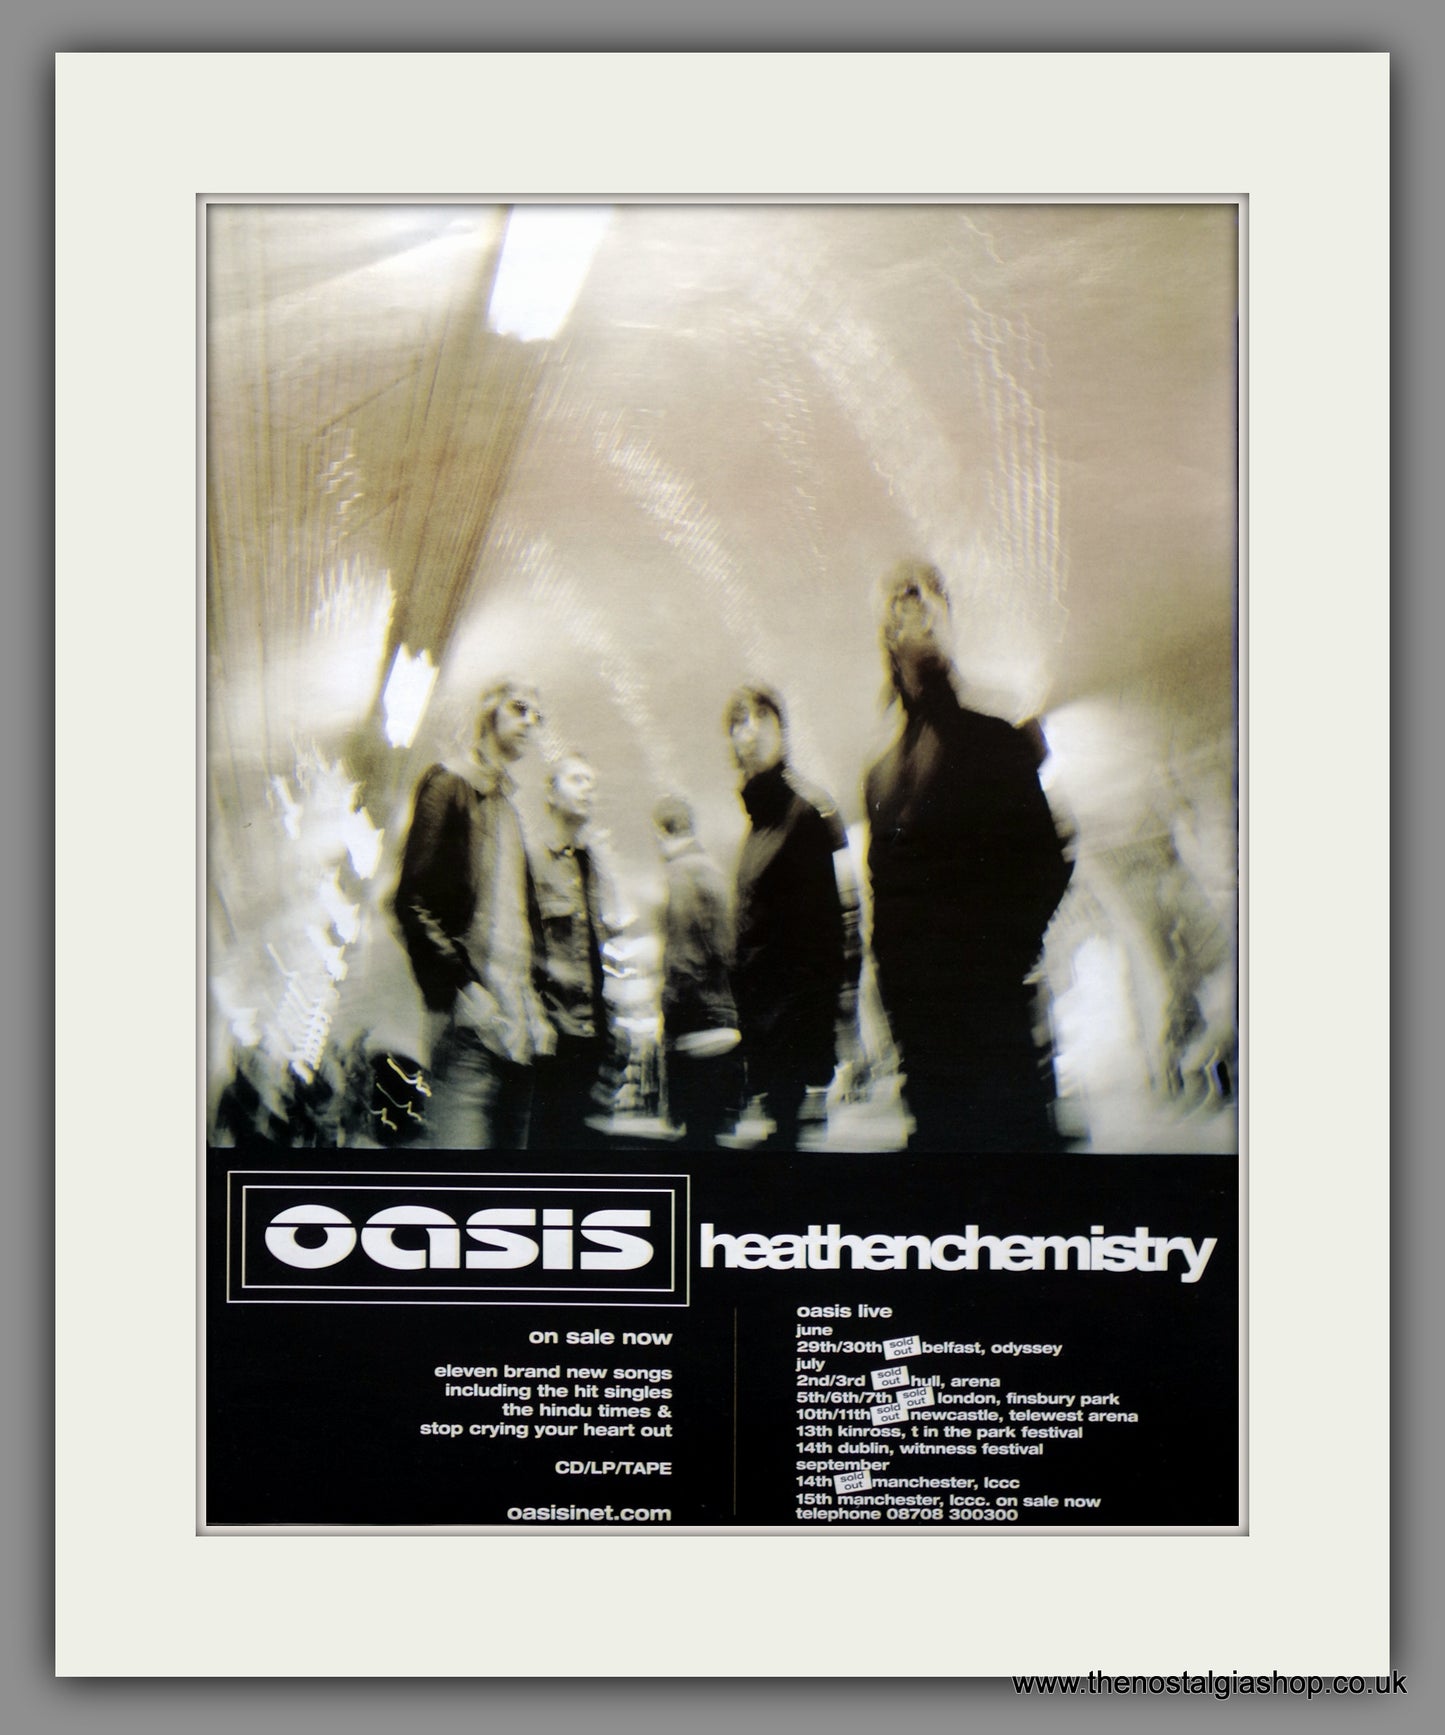 Oasis Heathen Chemistry Large Original Advert 2002 Ref Ad15412 The Nostalgia Shop